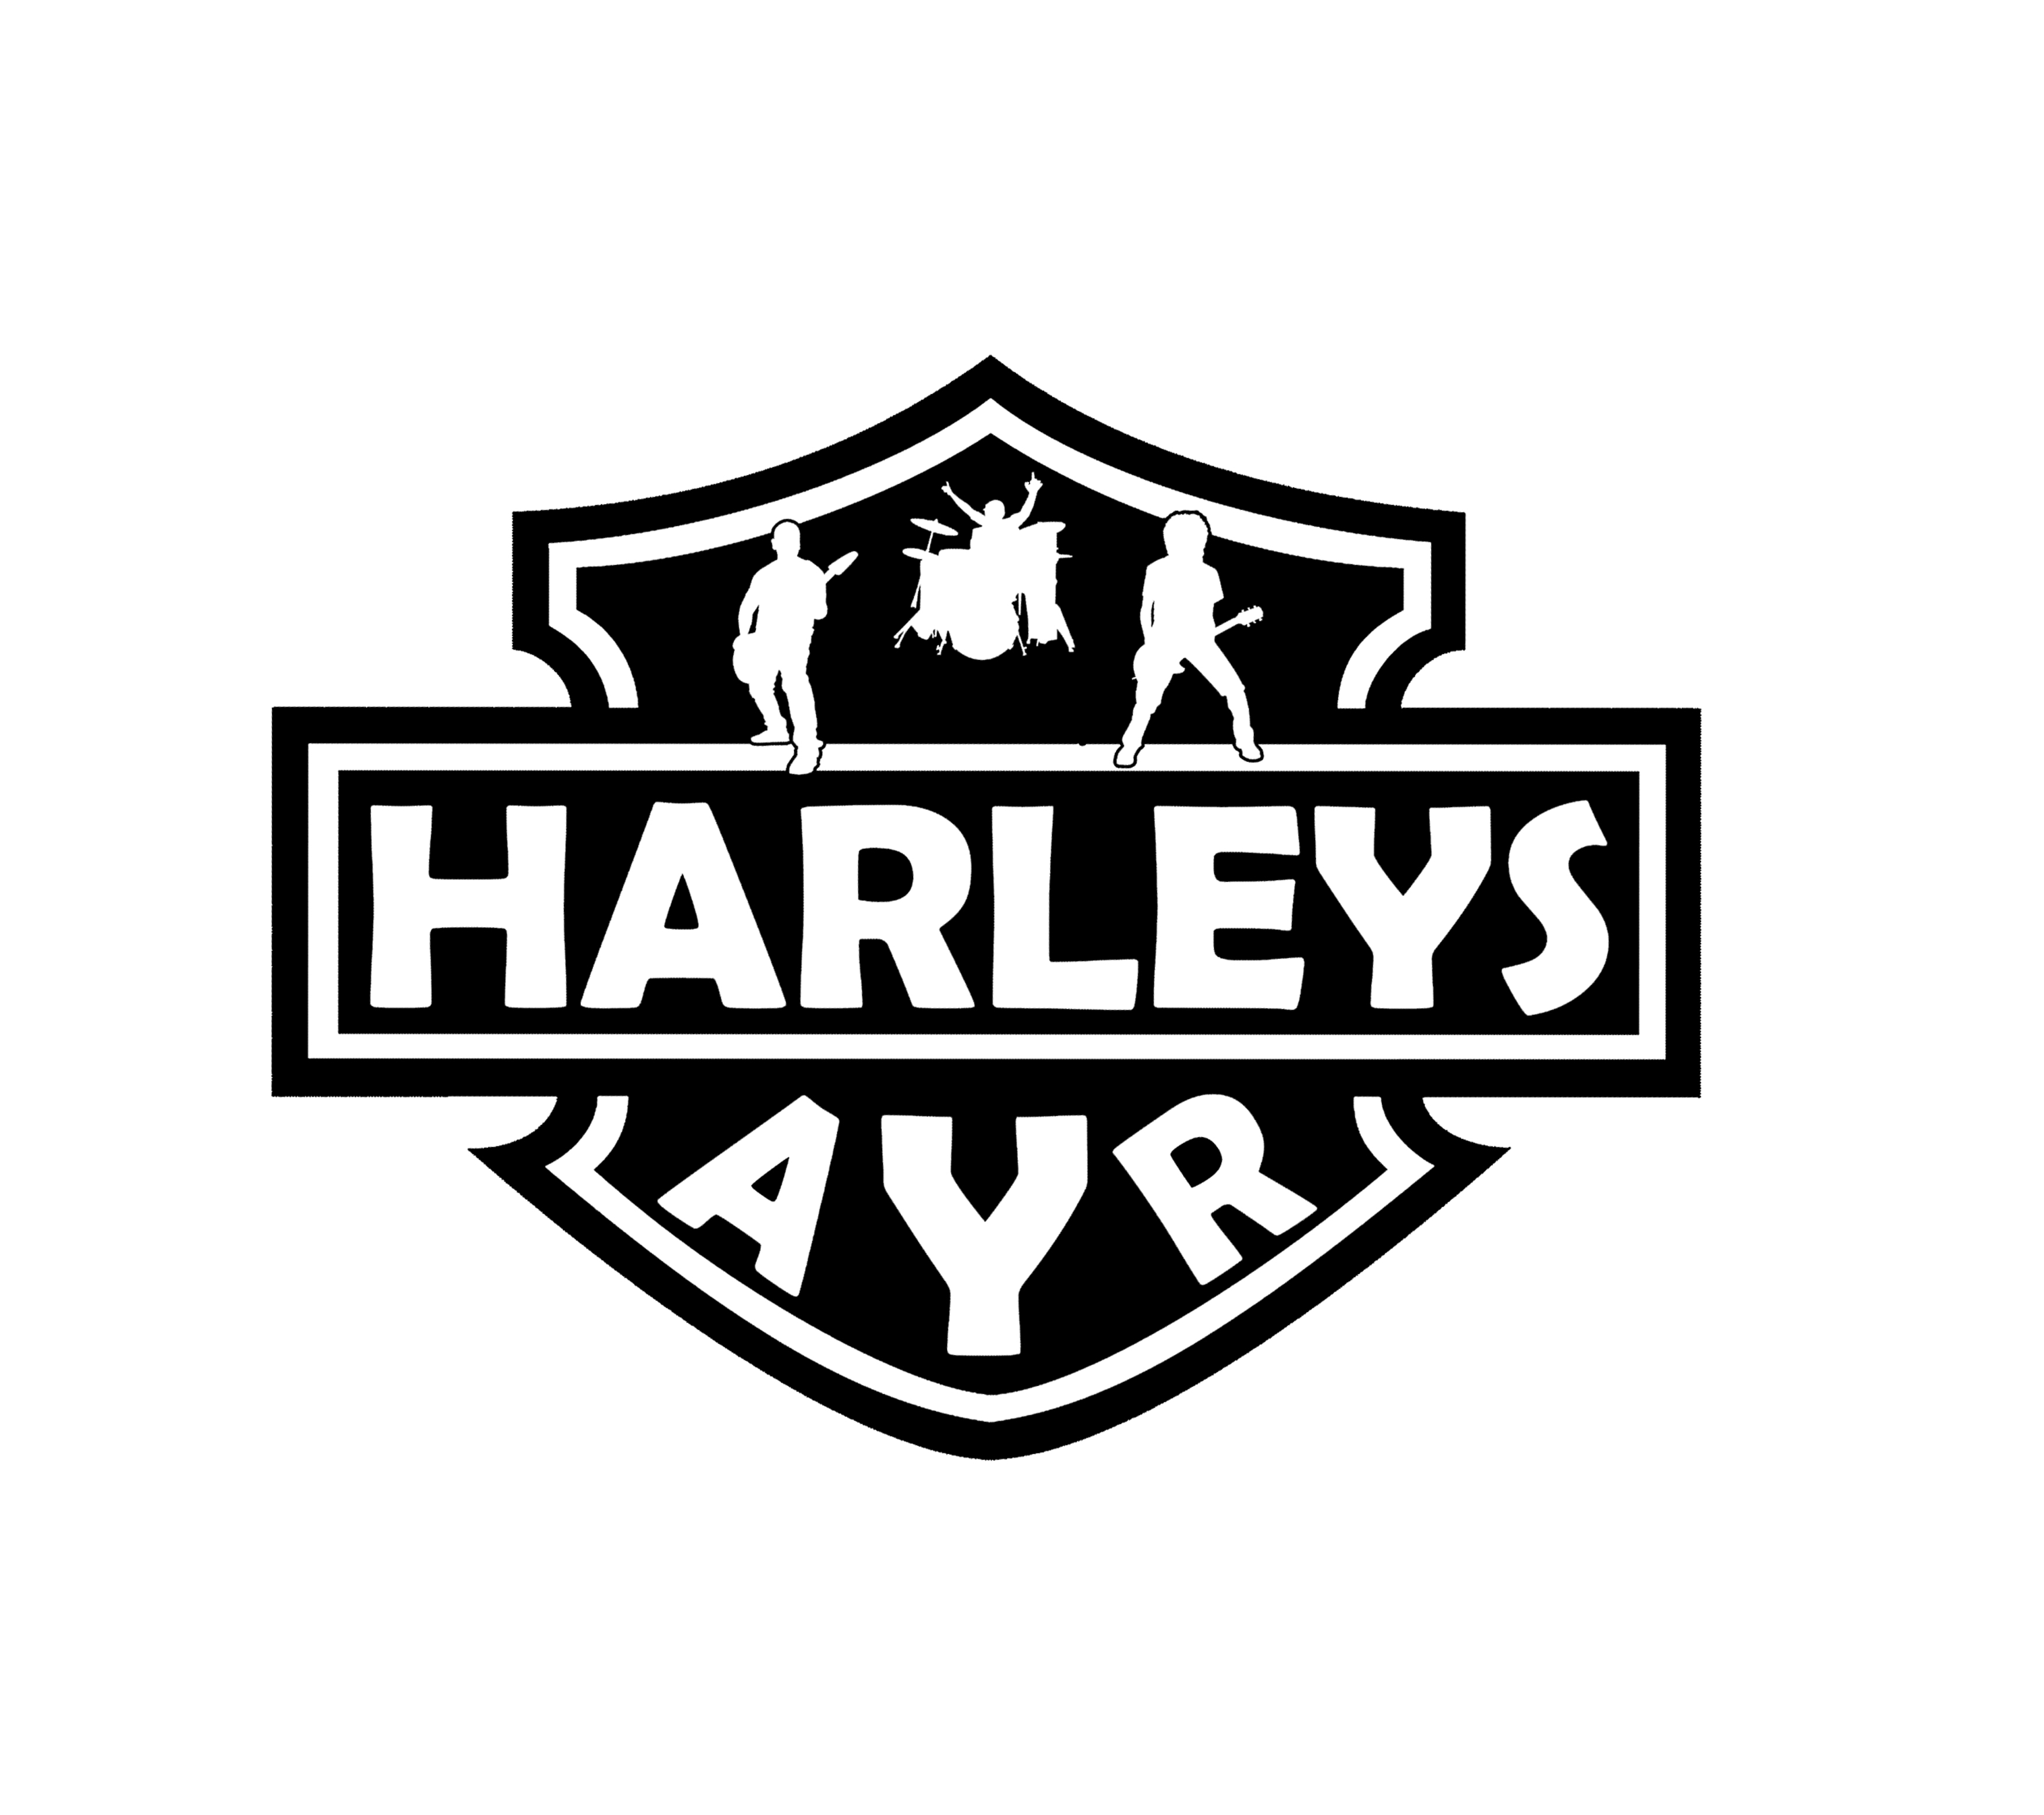 Harley's Ayr